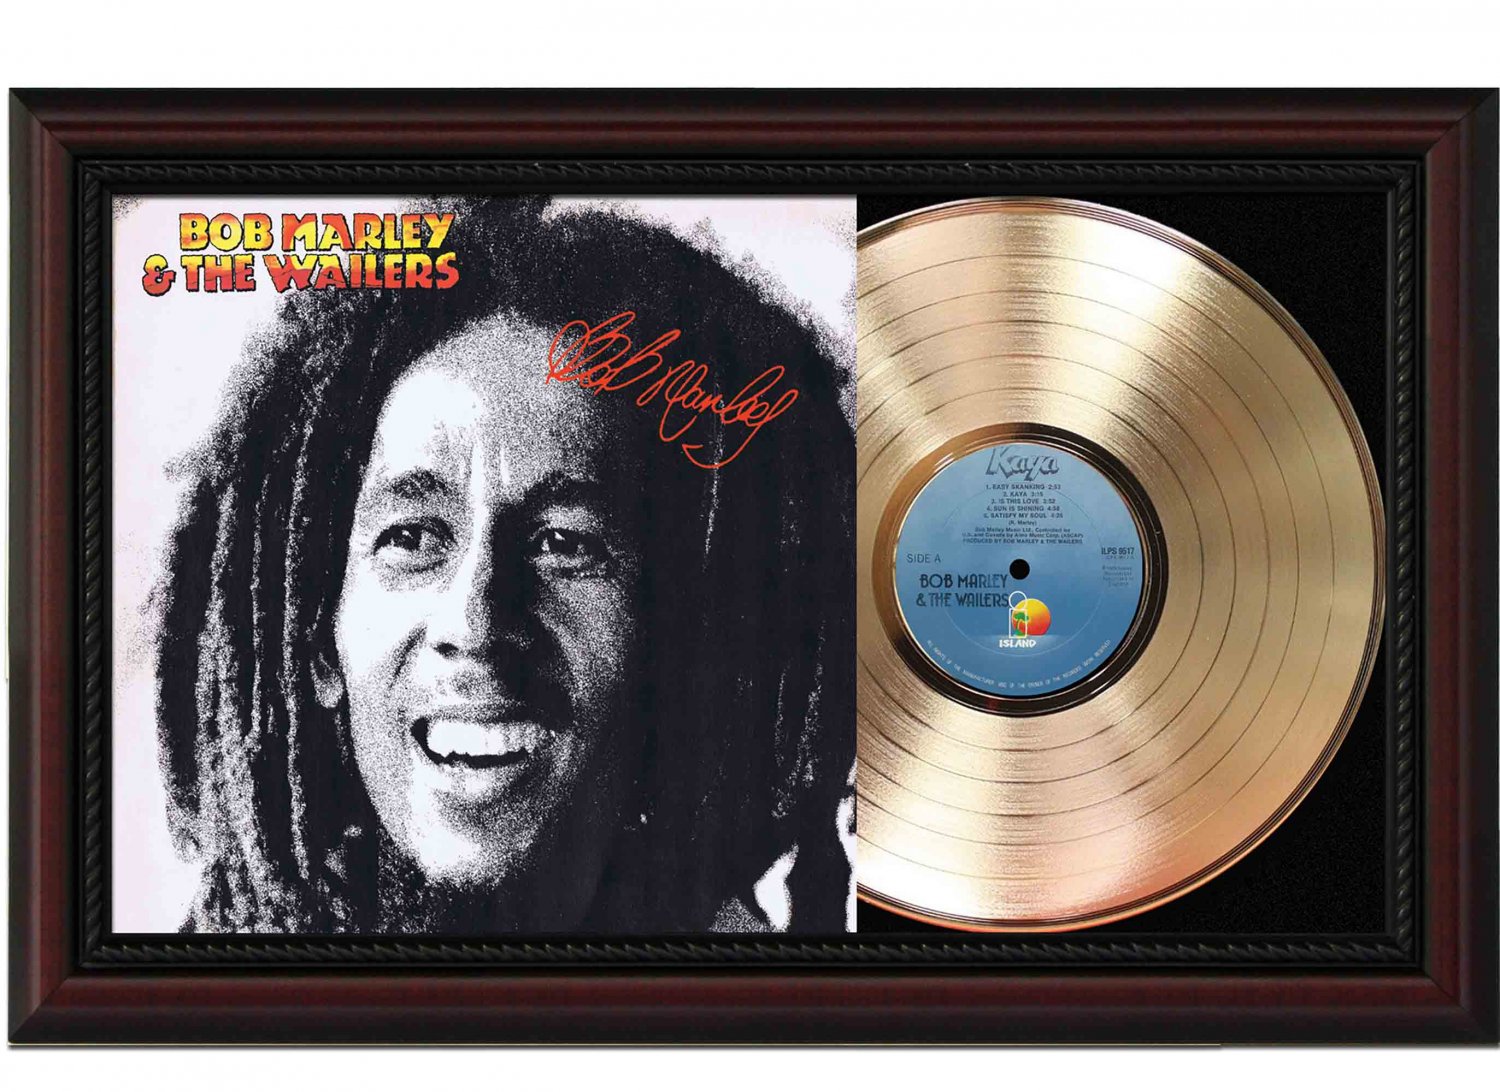 BOB MARLEY "Kaya" Framed Record Display.